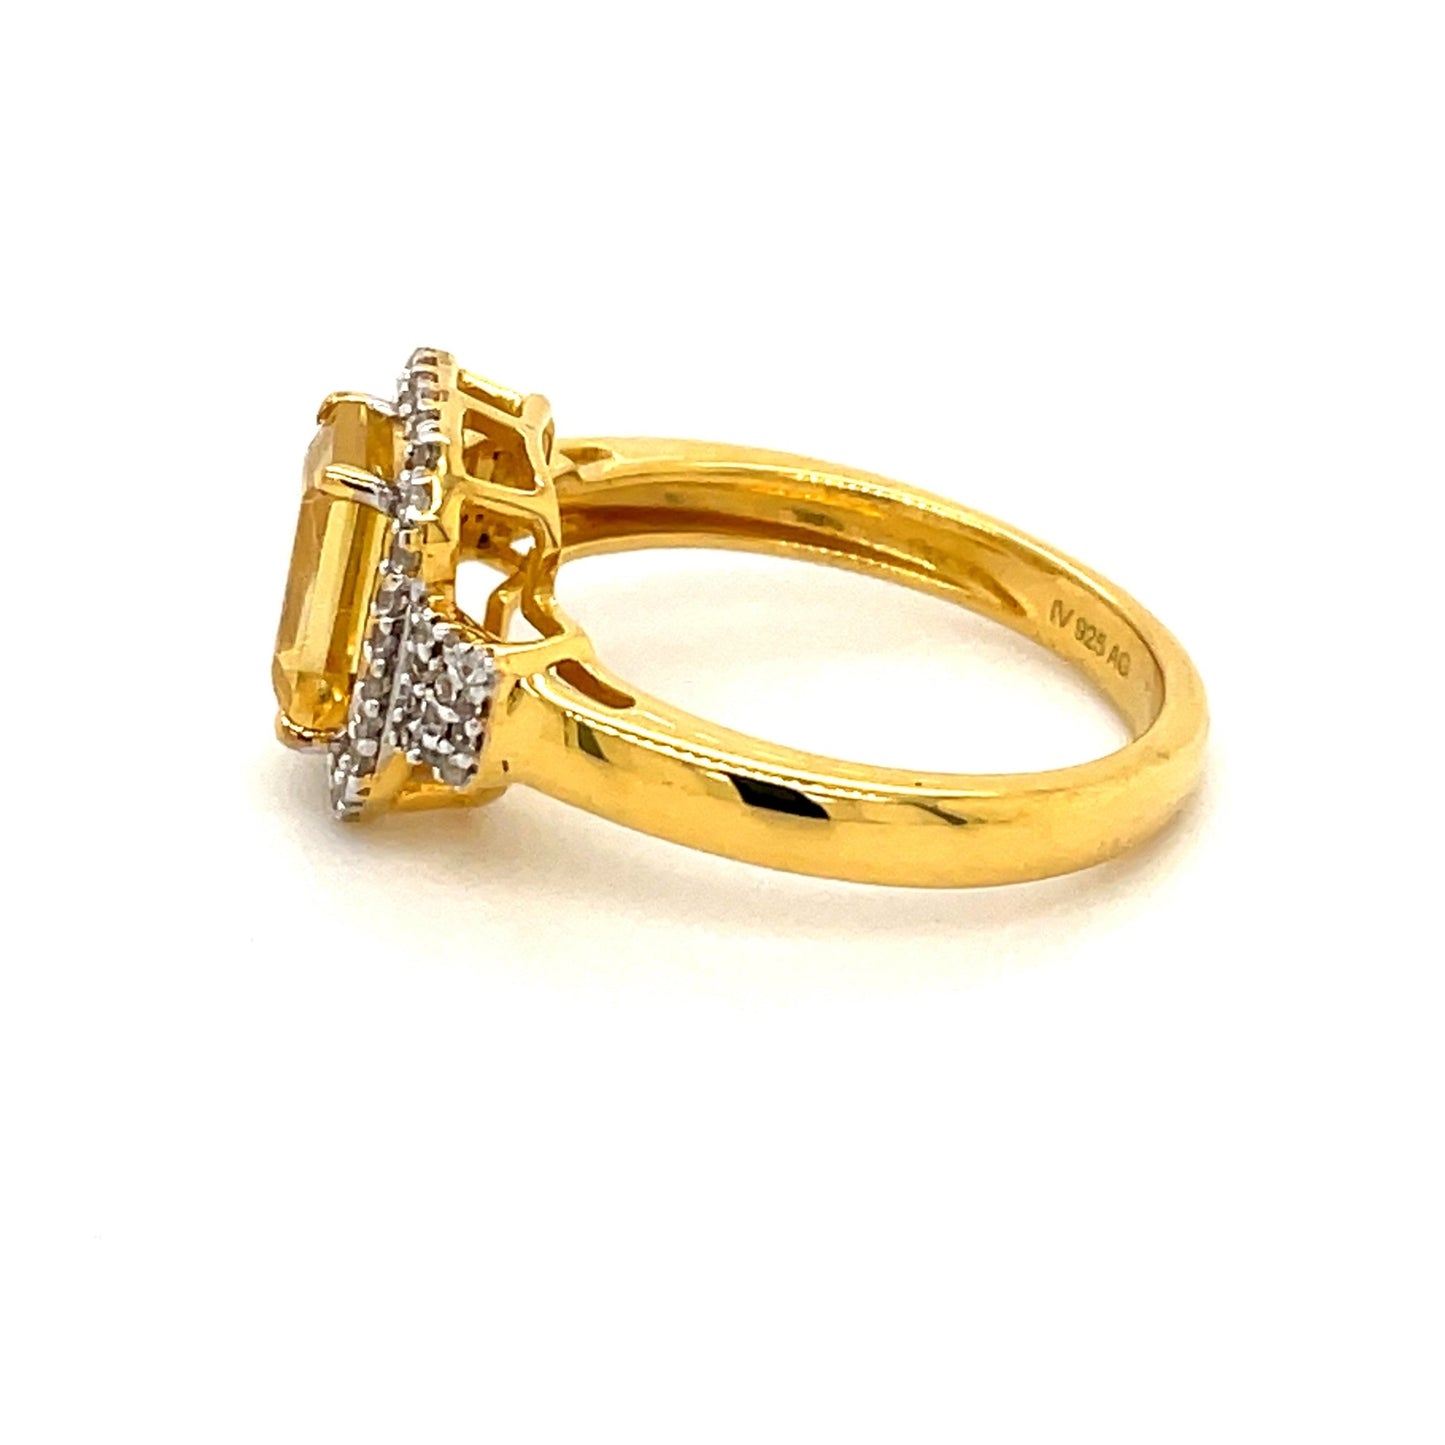 Ring mit Goldberyll & 50 Zirkonias in Silber 925 - JUWEL1